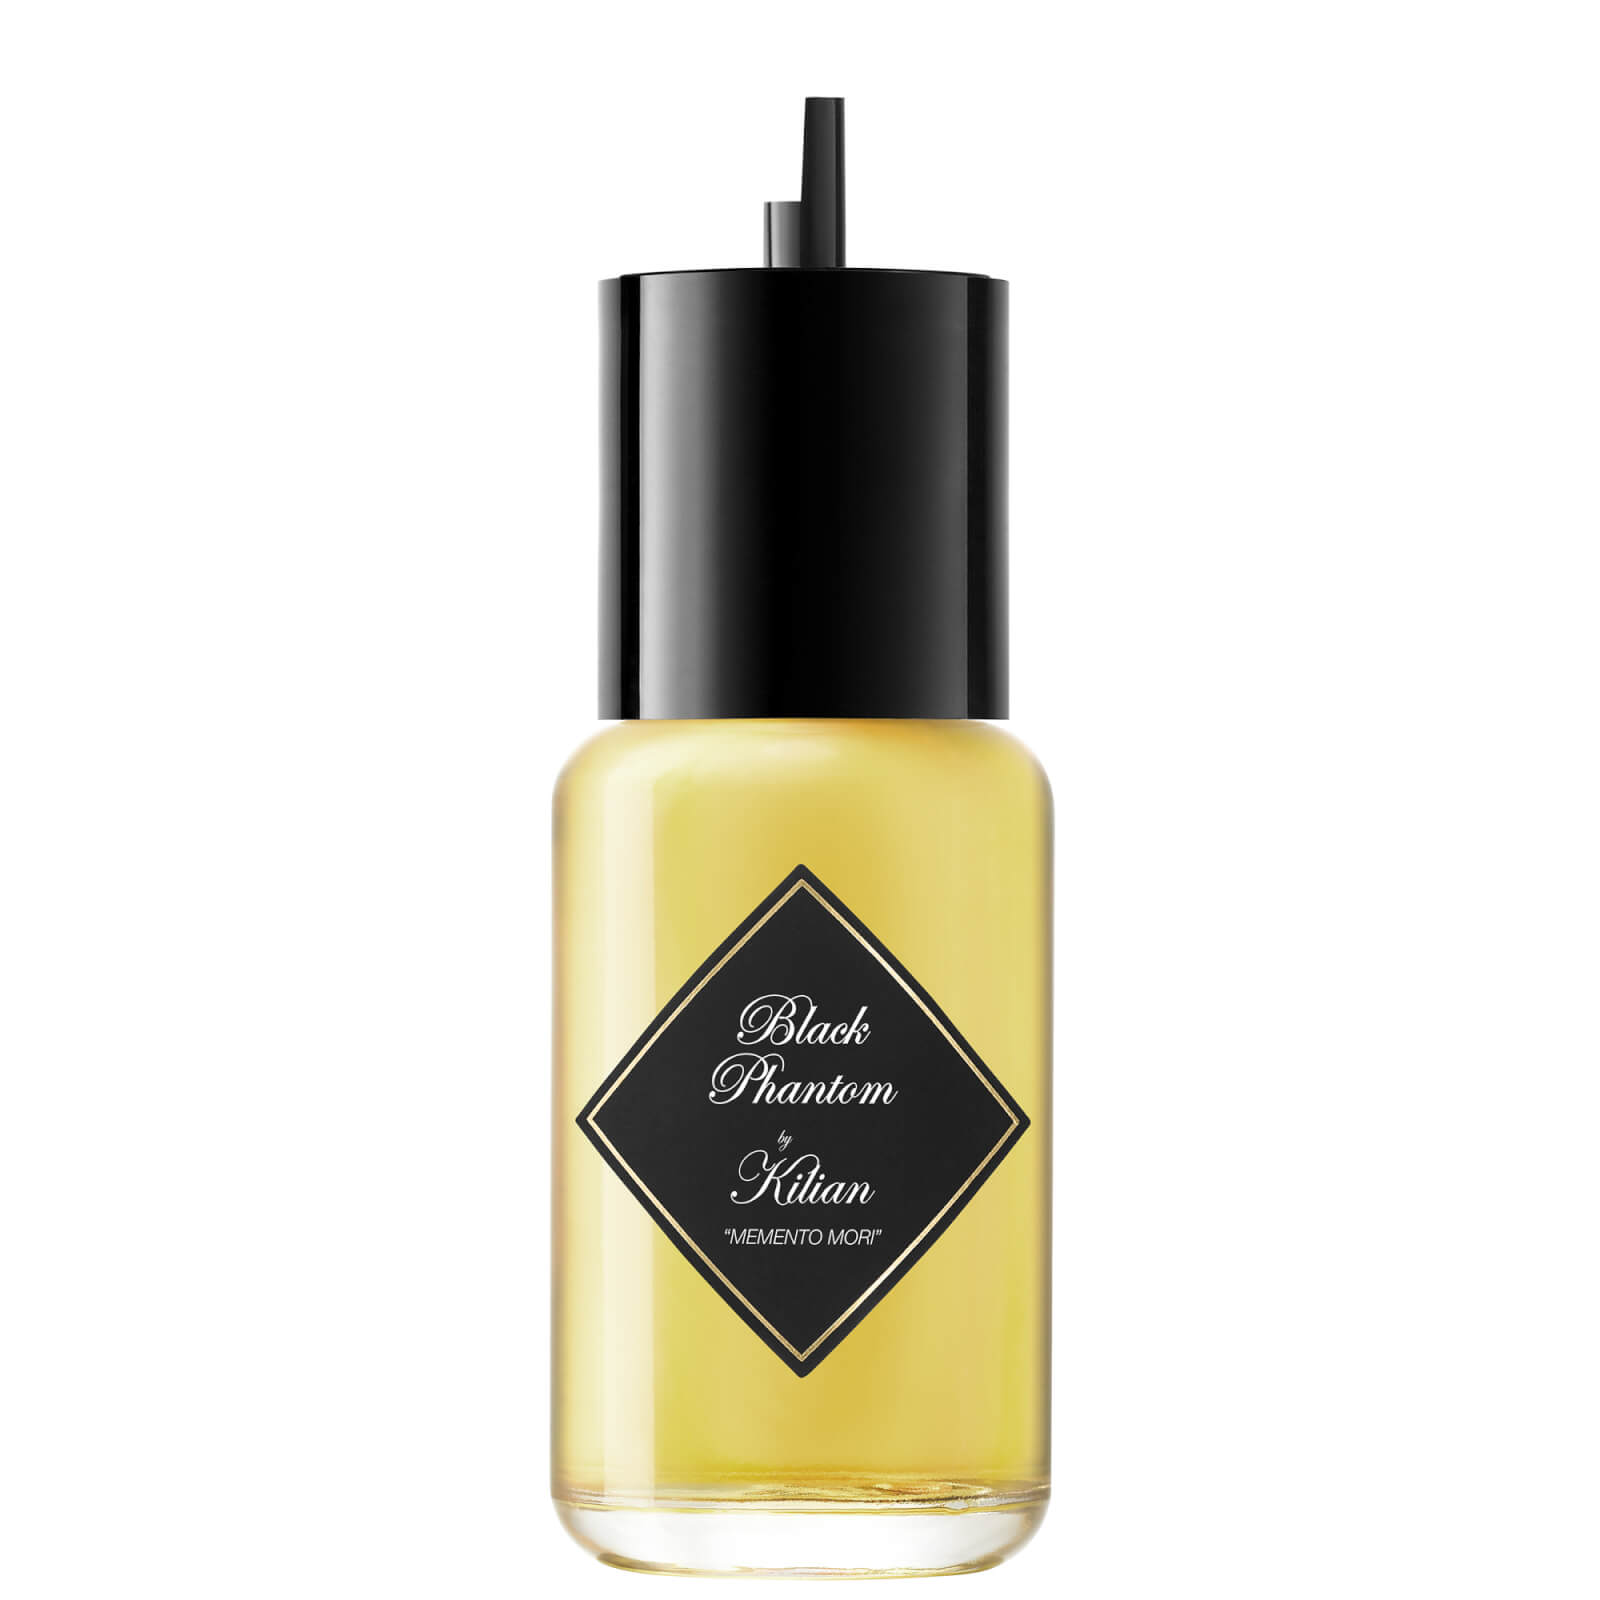 Photos - Women's Fragrance Kilian Black Phantom Eau de Parfum - 50ml Refill 